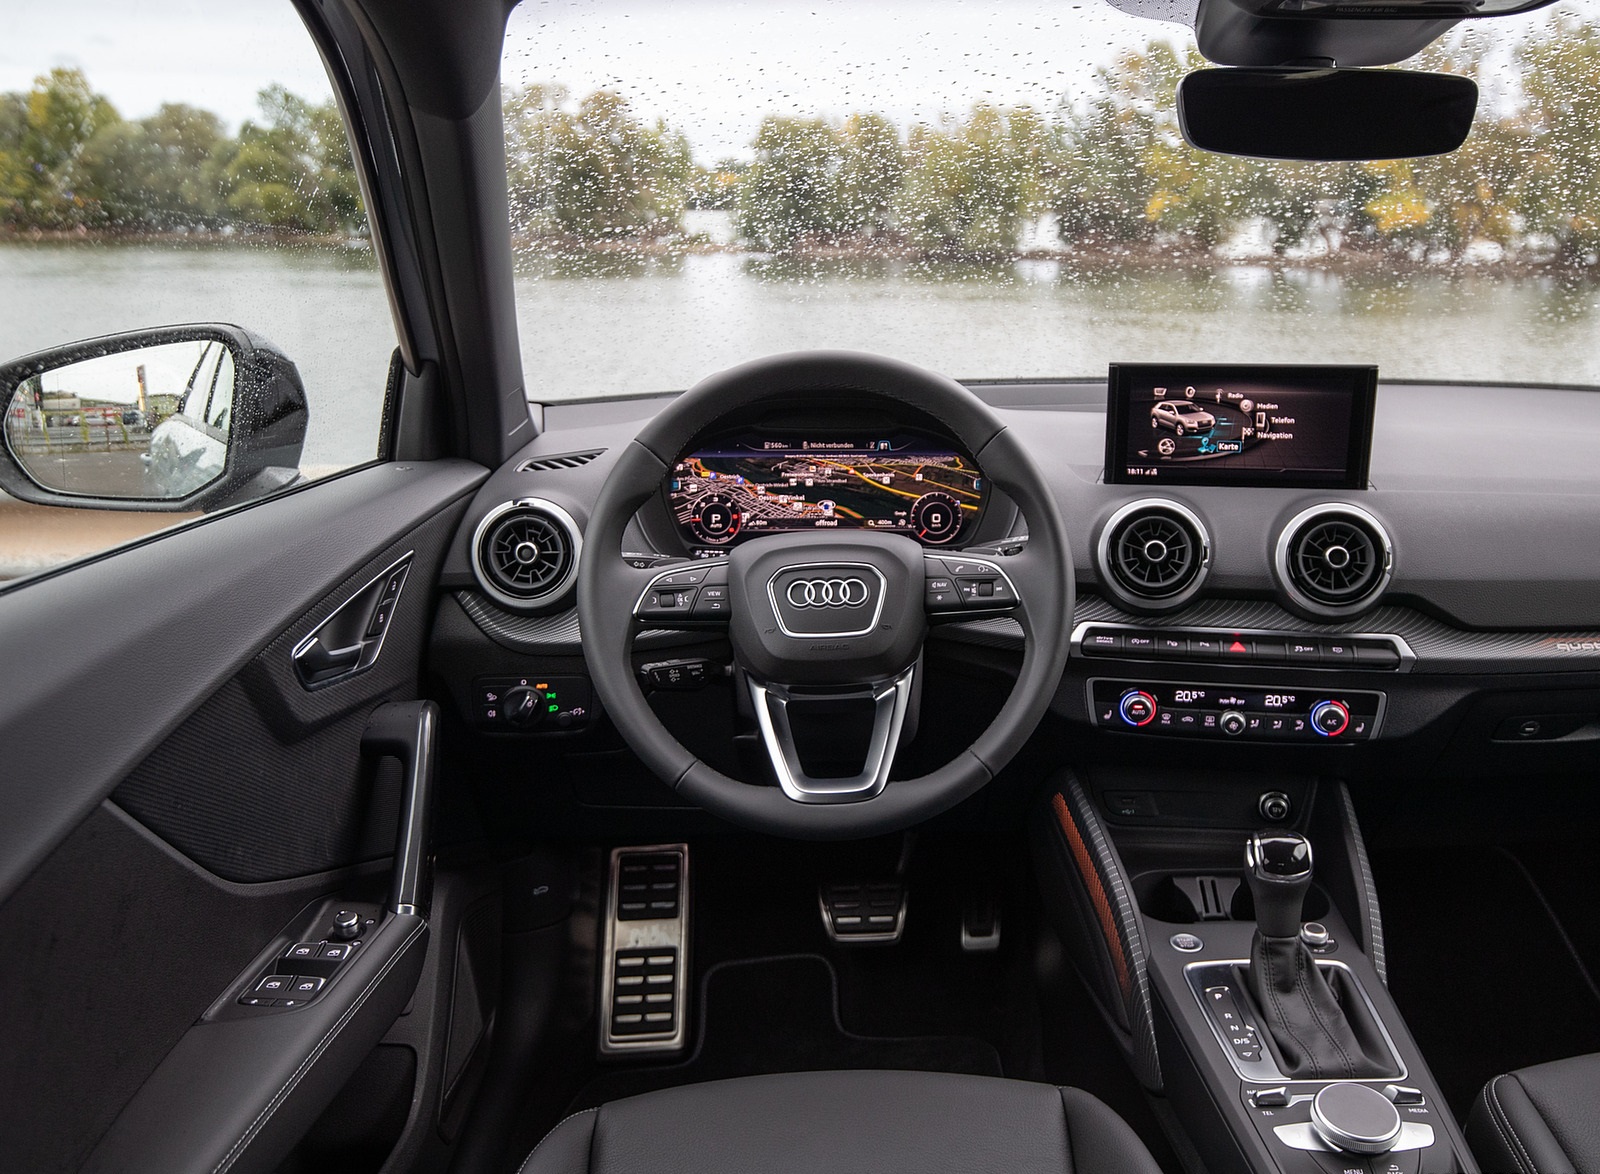 2021 Audi Q2 Interior Cockpit Wallpapers #33 of 196